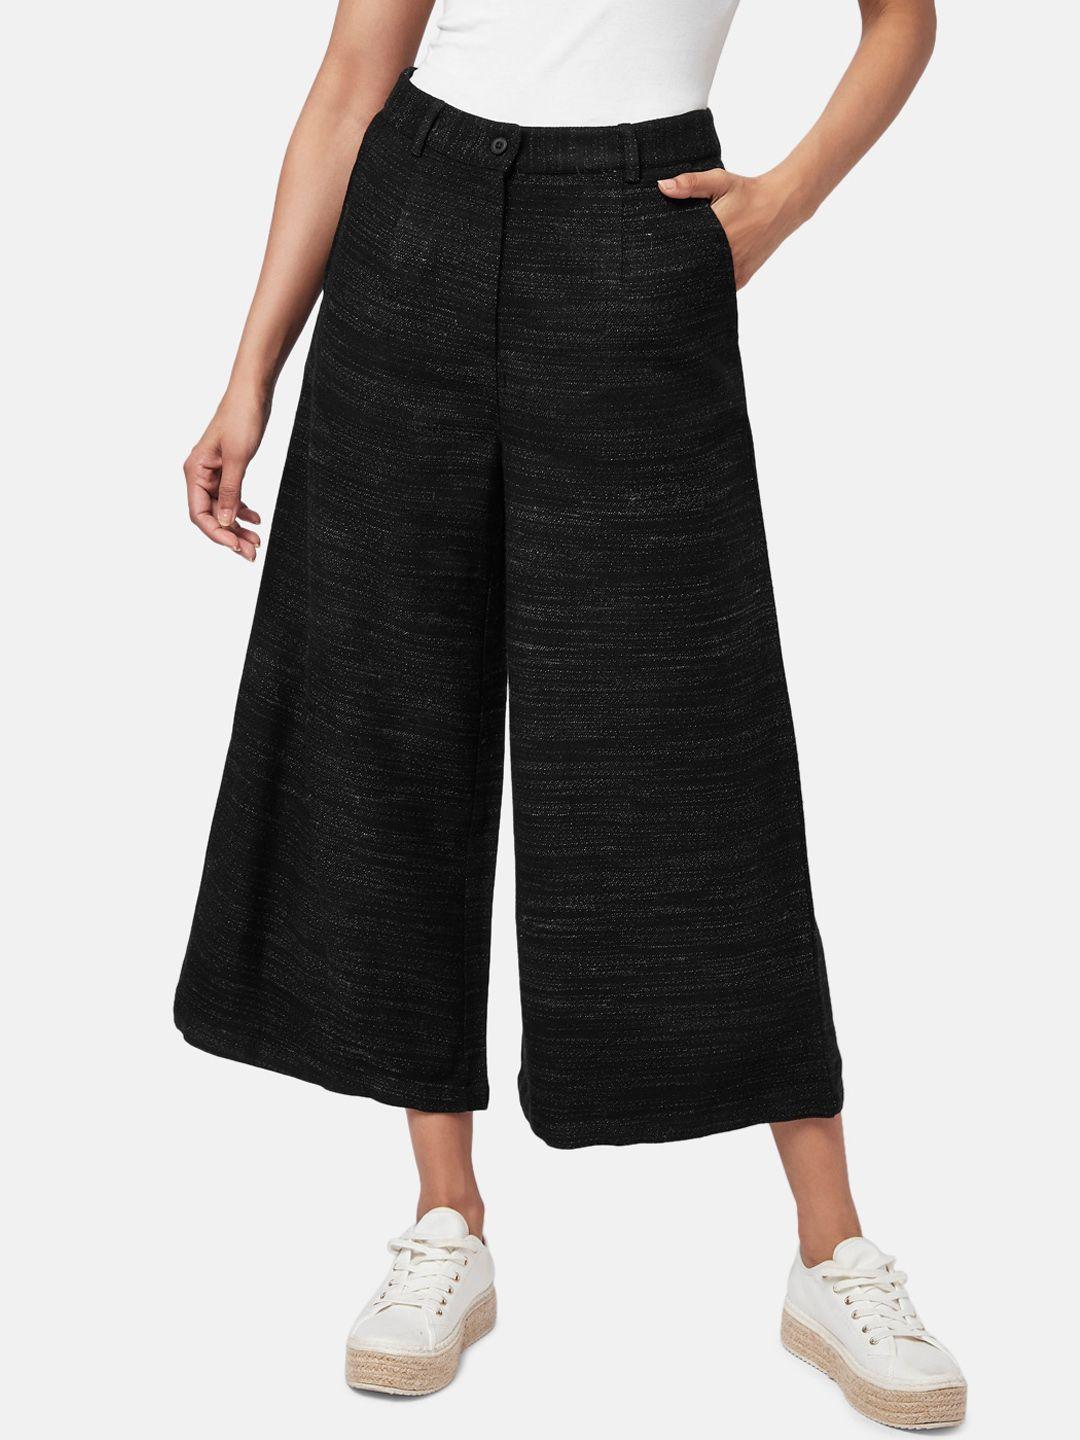 akkriti by pantaloons women black acrylic culottes trouser